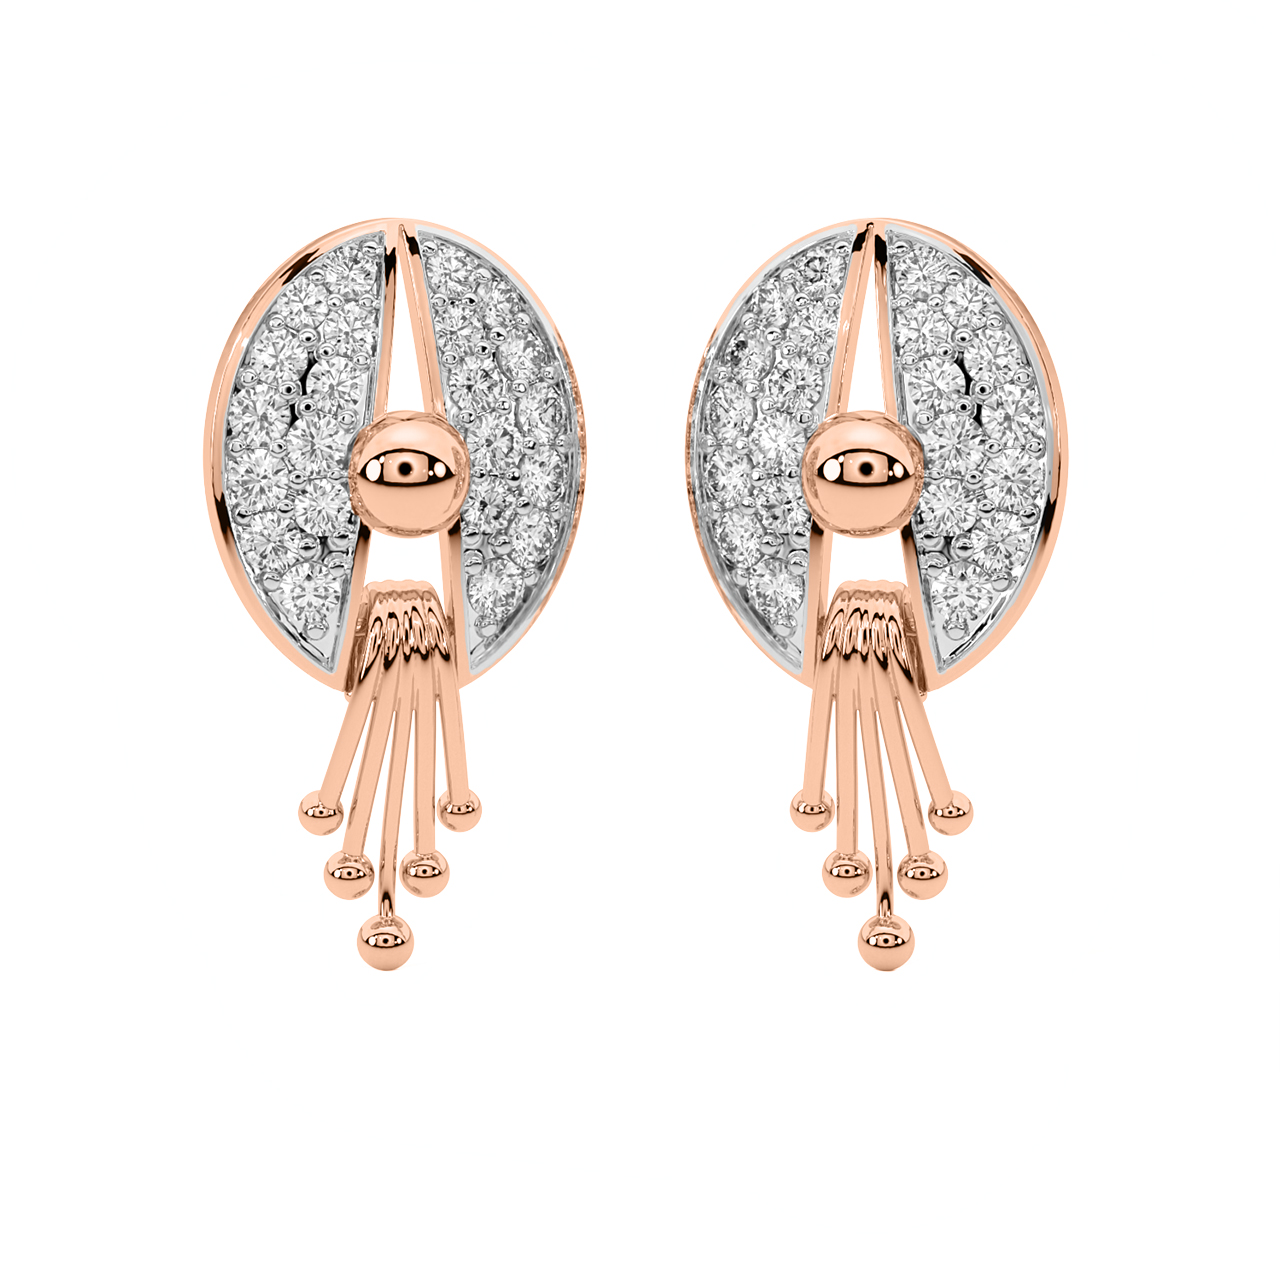 Stylish Designer Diamond Earrings